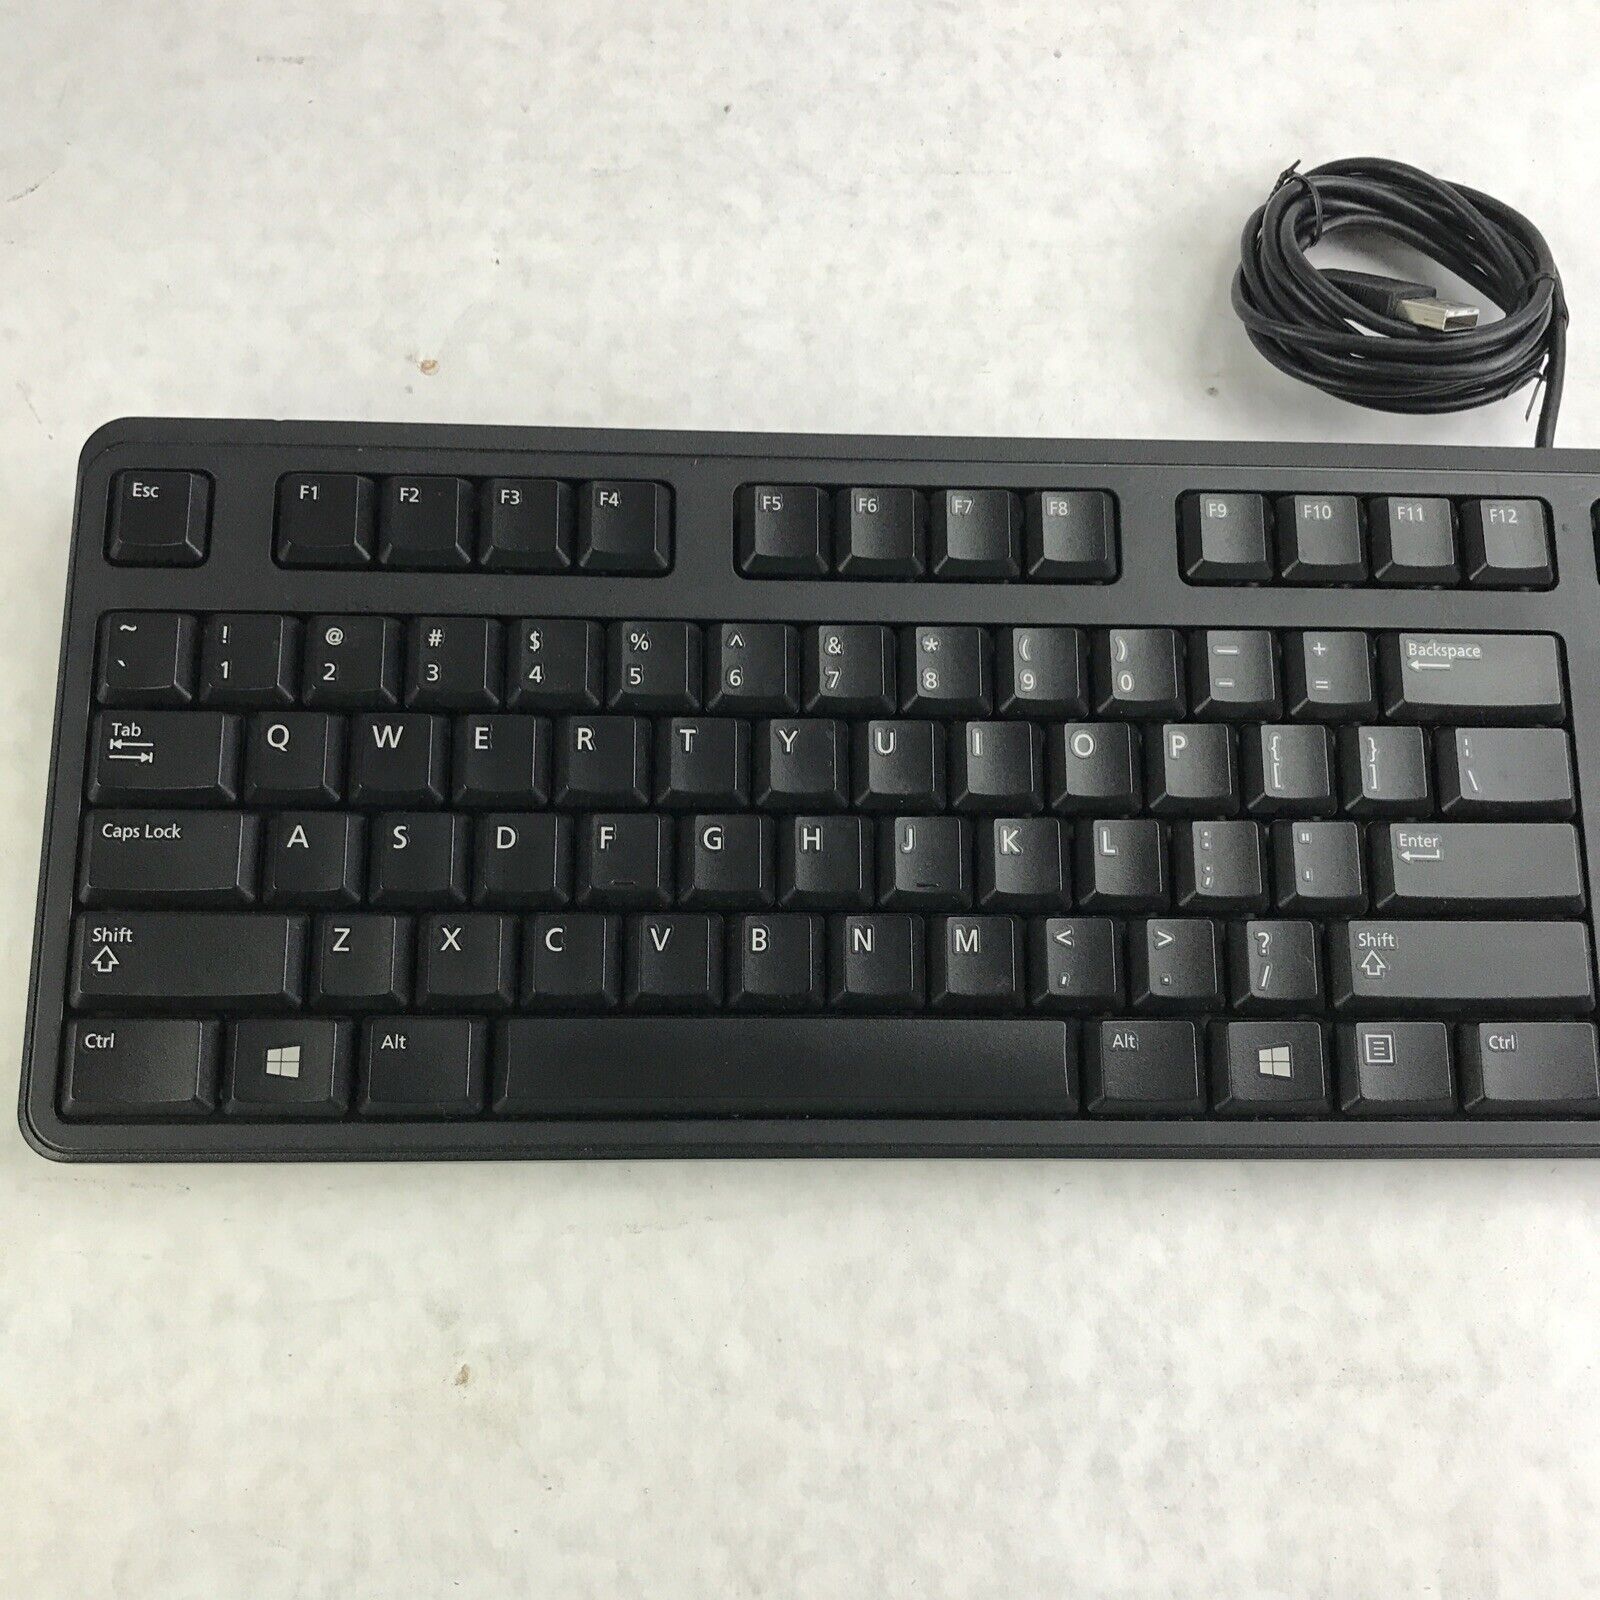 Black Dell KB212-B USB Wired 104-Key Desktop Computer Keyboard 1HF2Y DJ454 DJ458